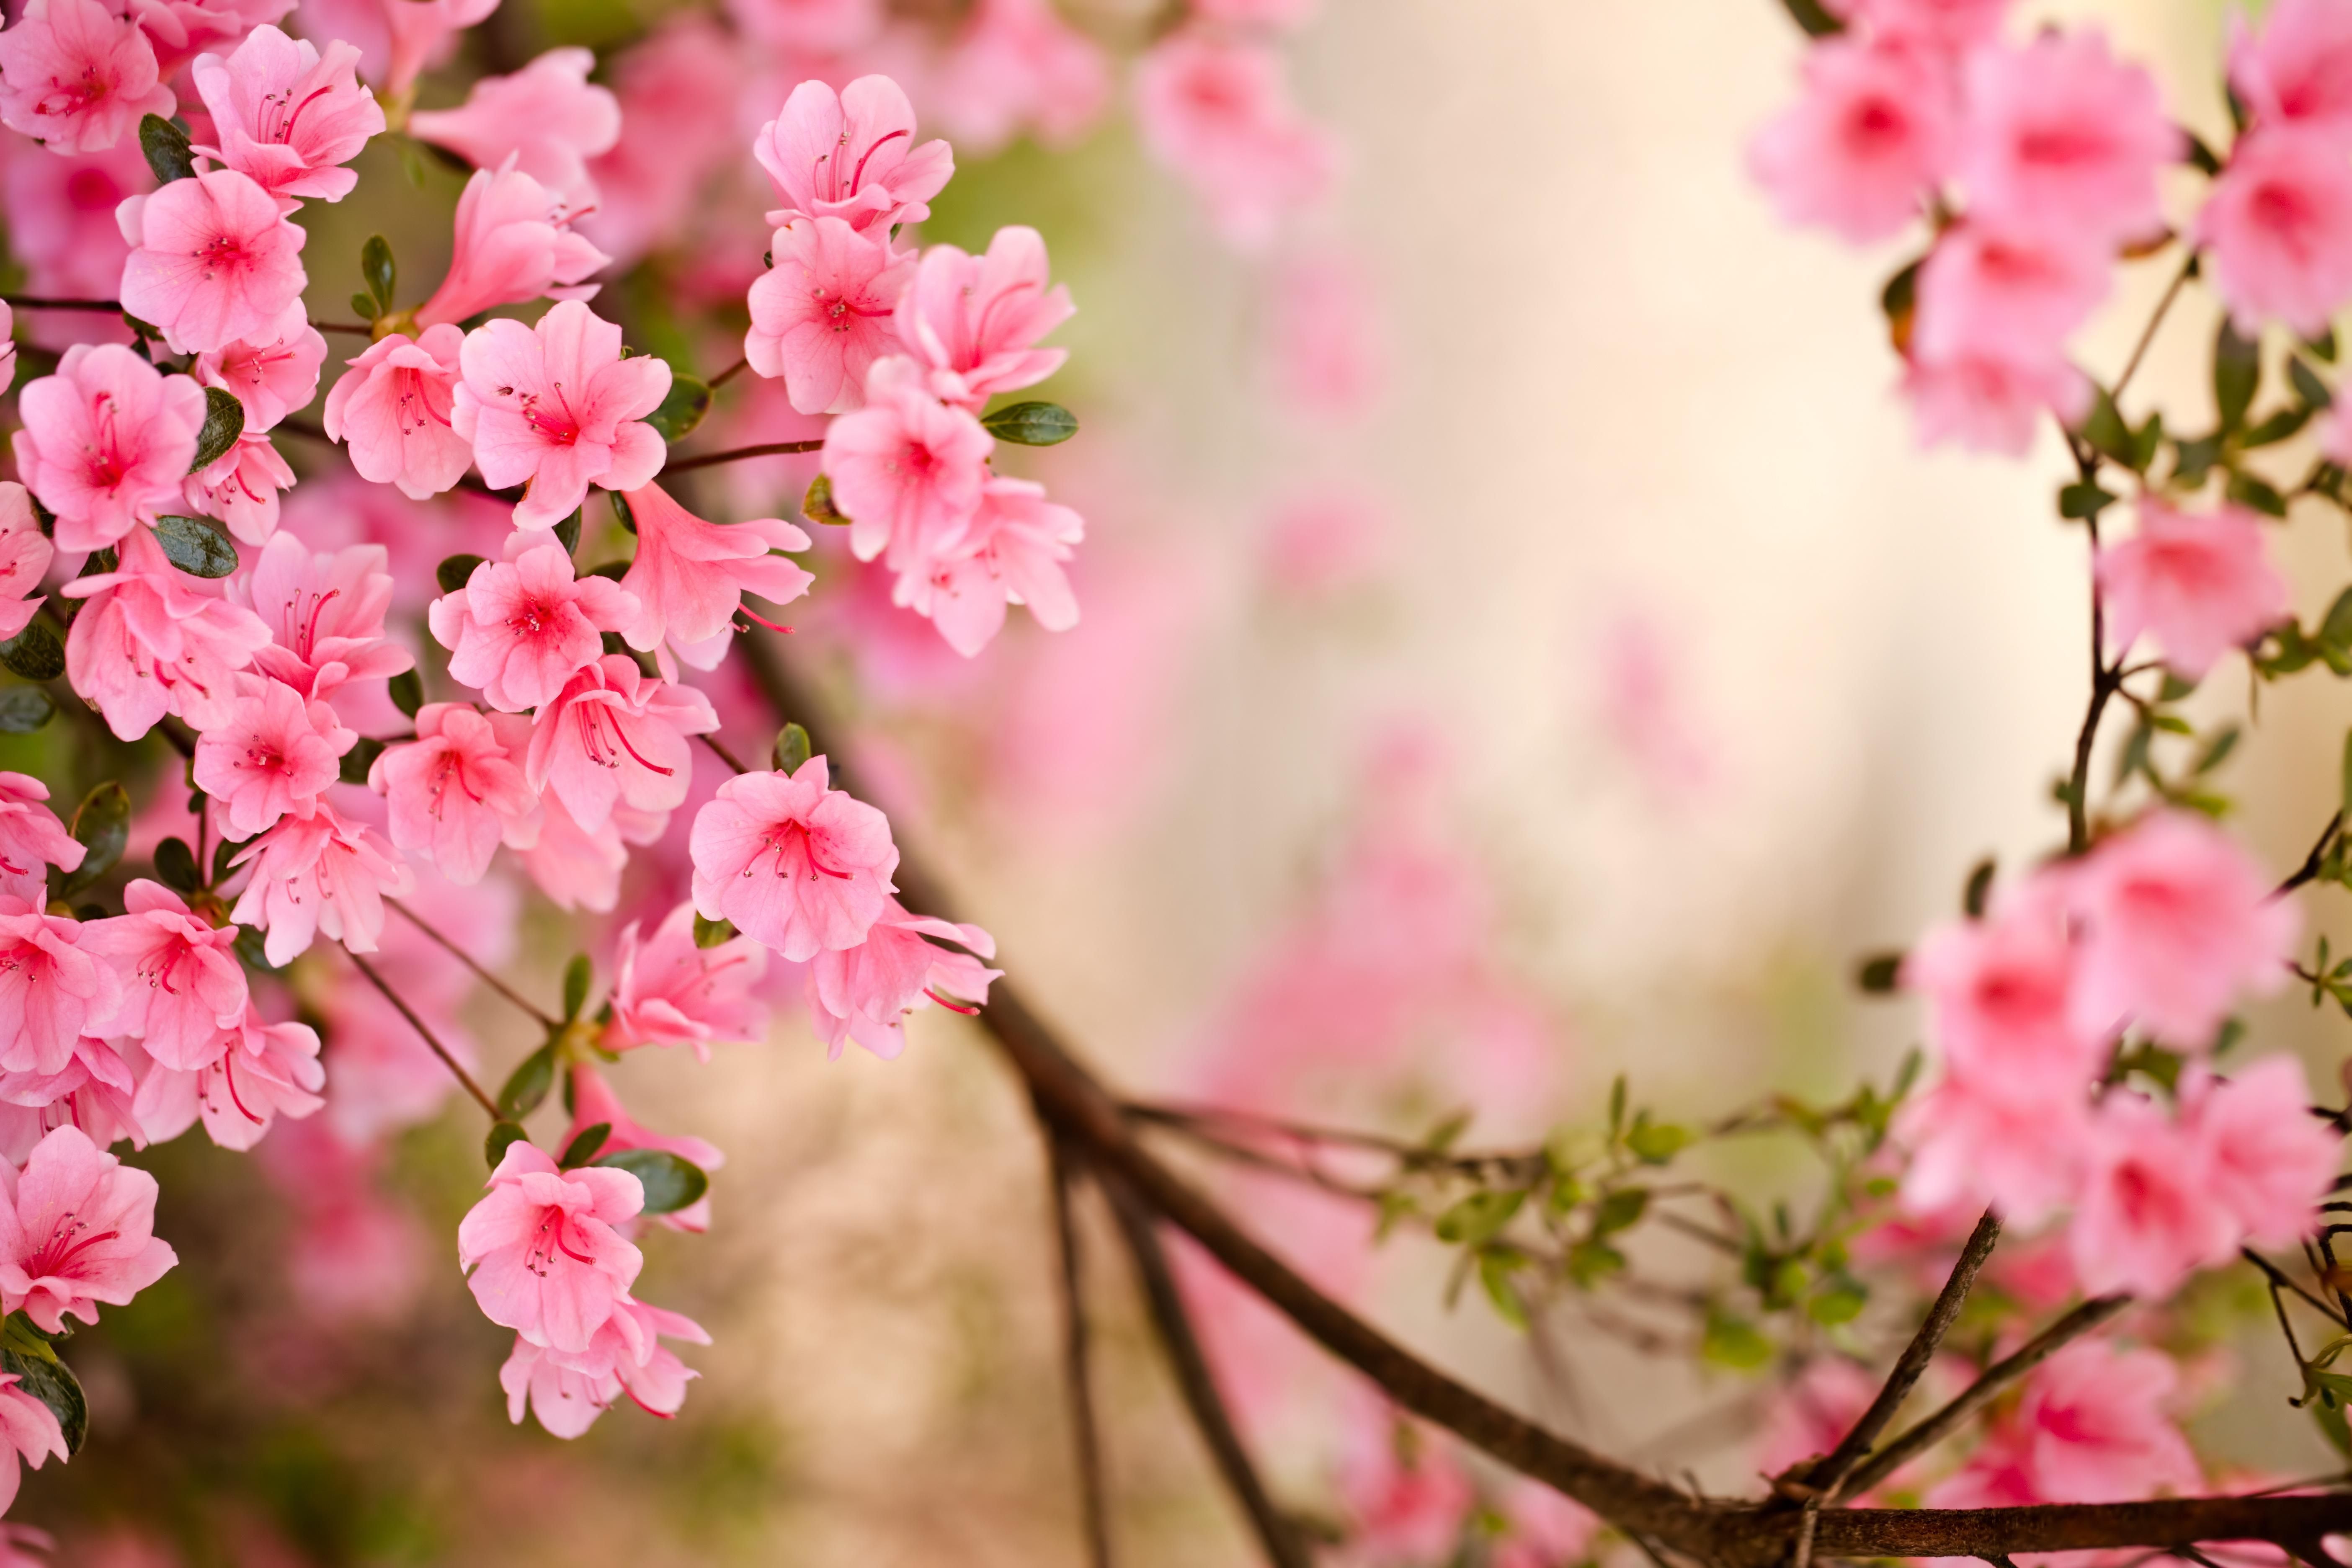 Songs of Spring. Spring flowers image, Spring desktop wallpaper, Spring wallpaper hd